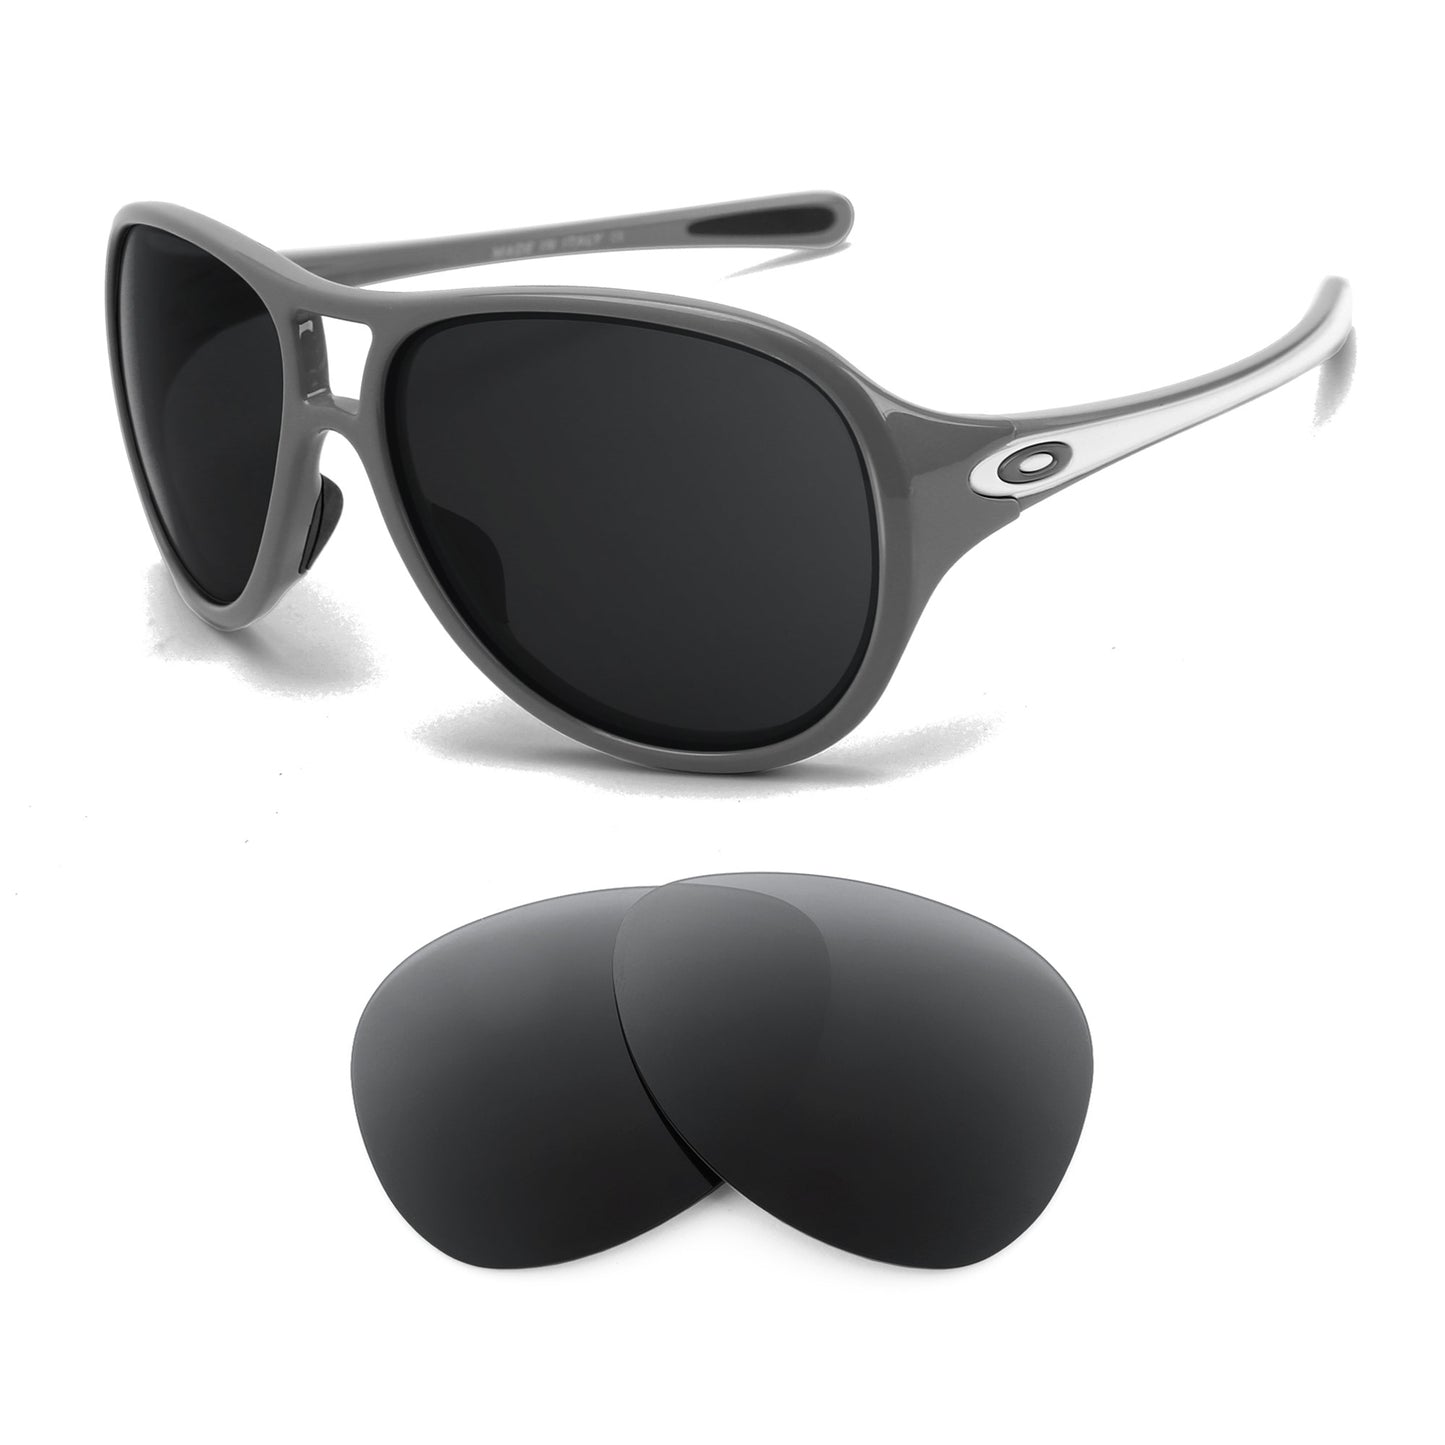 Oakley Twentysix.2 sunglasses with replacement lenses